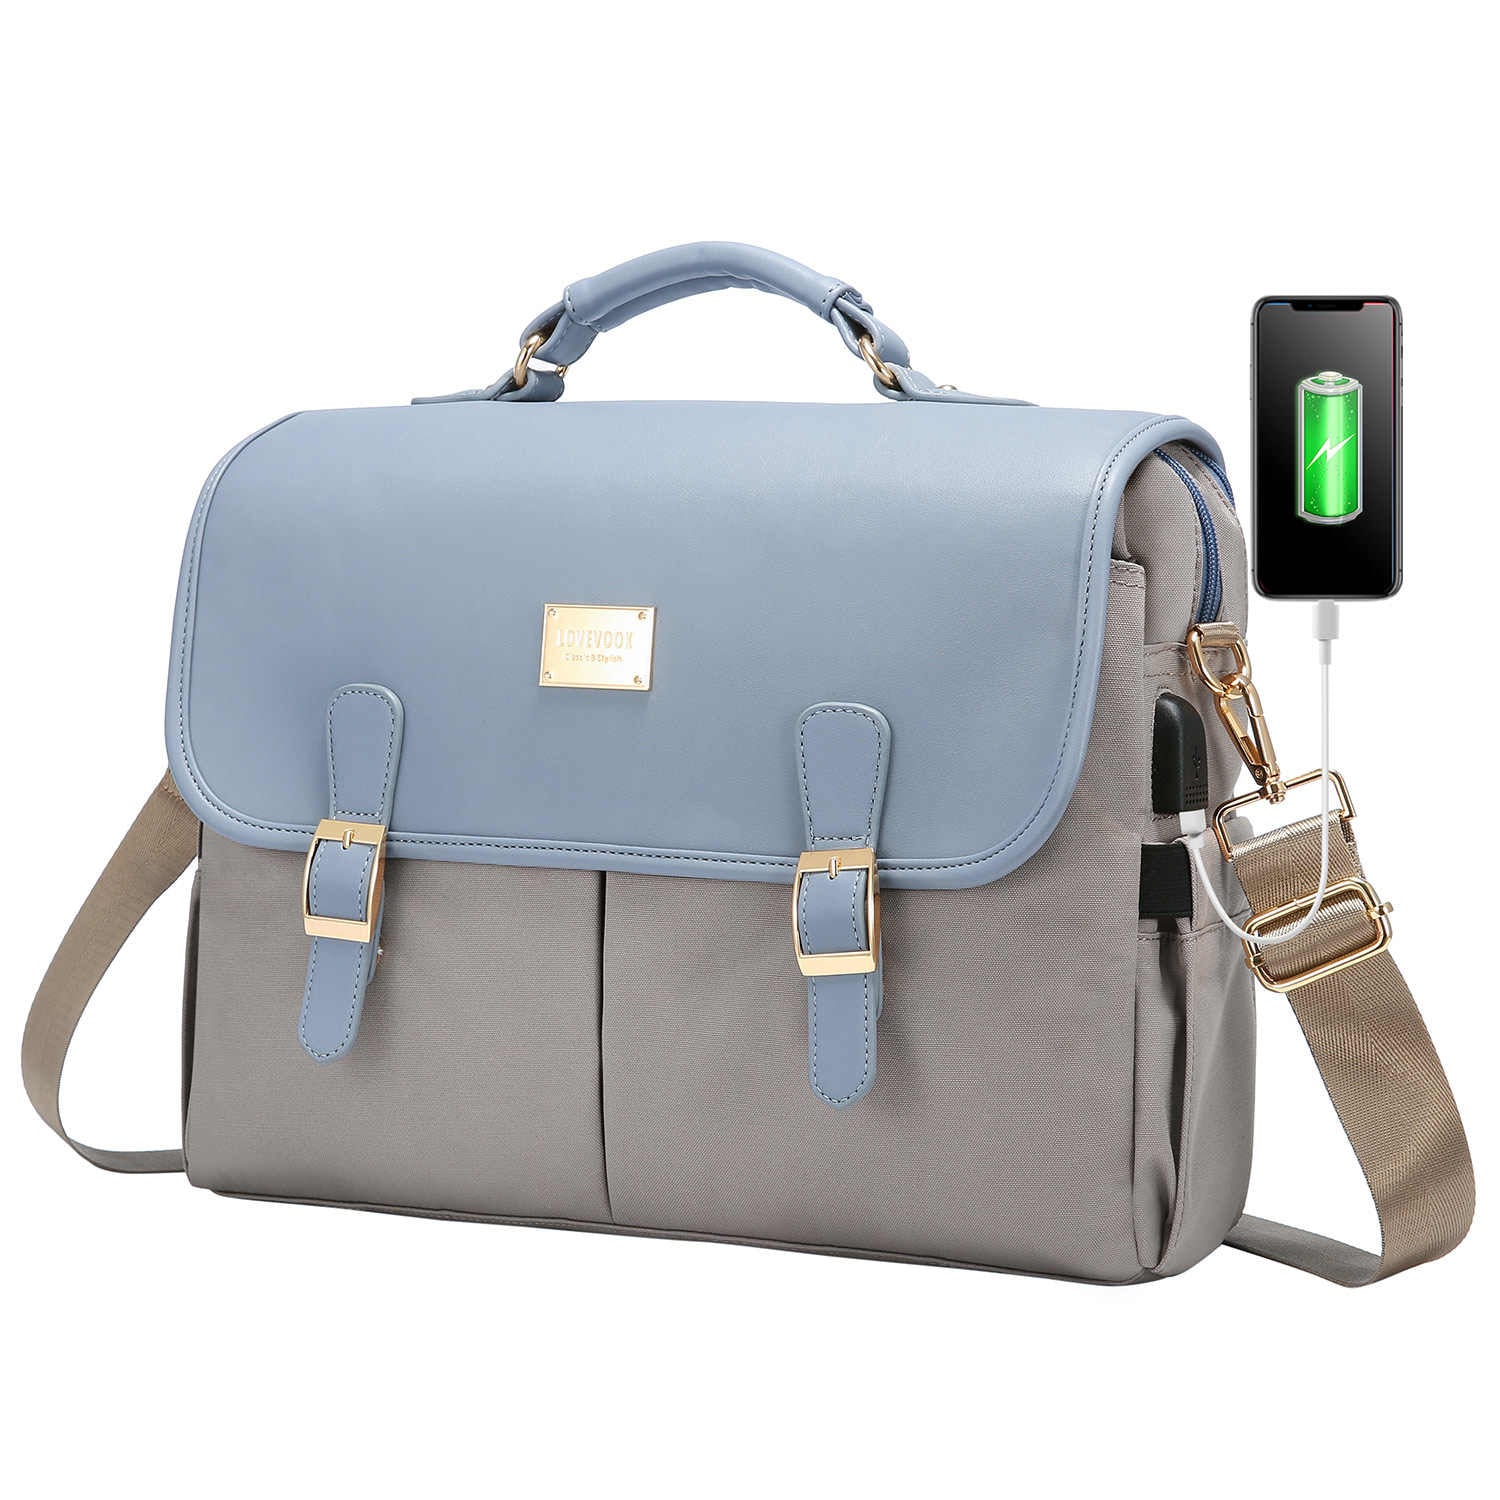 LOVEVOOK Laptop Bag for Women, Large Capacity Computer Bags Cute Shoulder  Messenger Bag, Business Wo…See more LOVEVOOK Laptop Bag for Women, Large